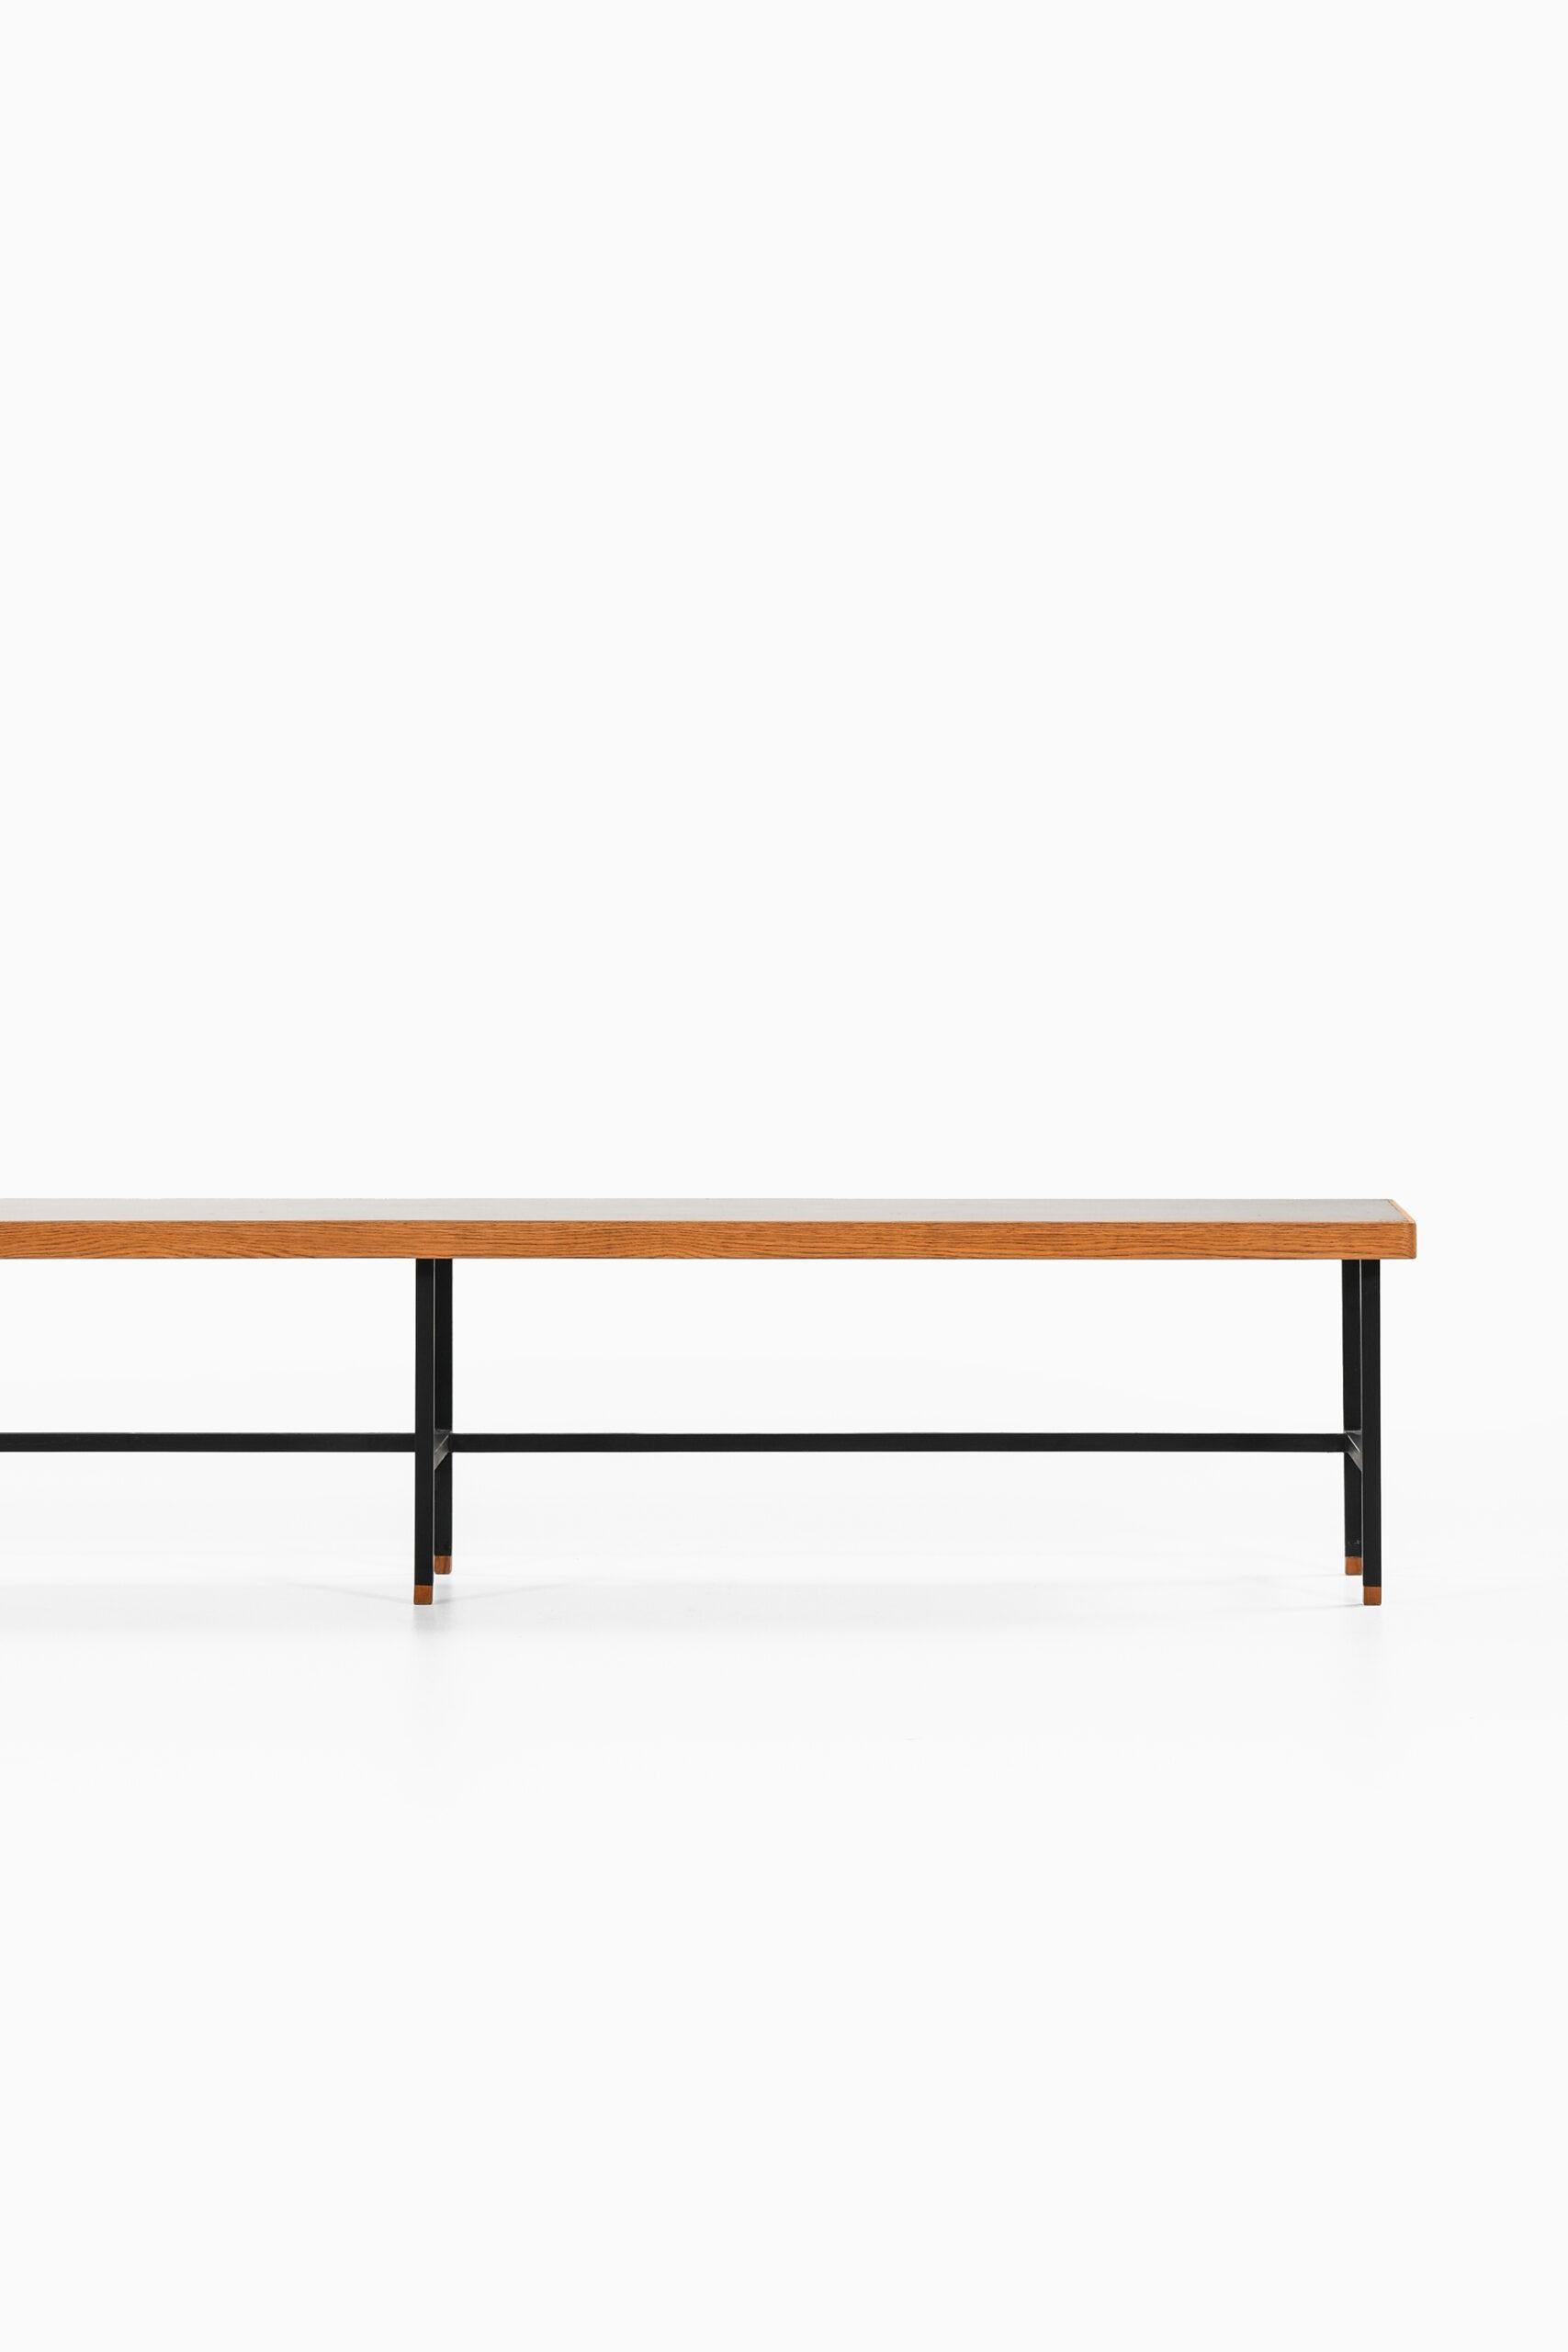 Rare bench / side table designed by Kurt Østervig. Produced by Jason Møbler in Denmark.